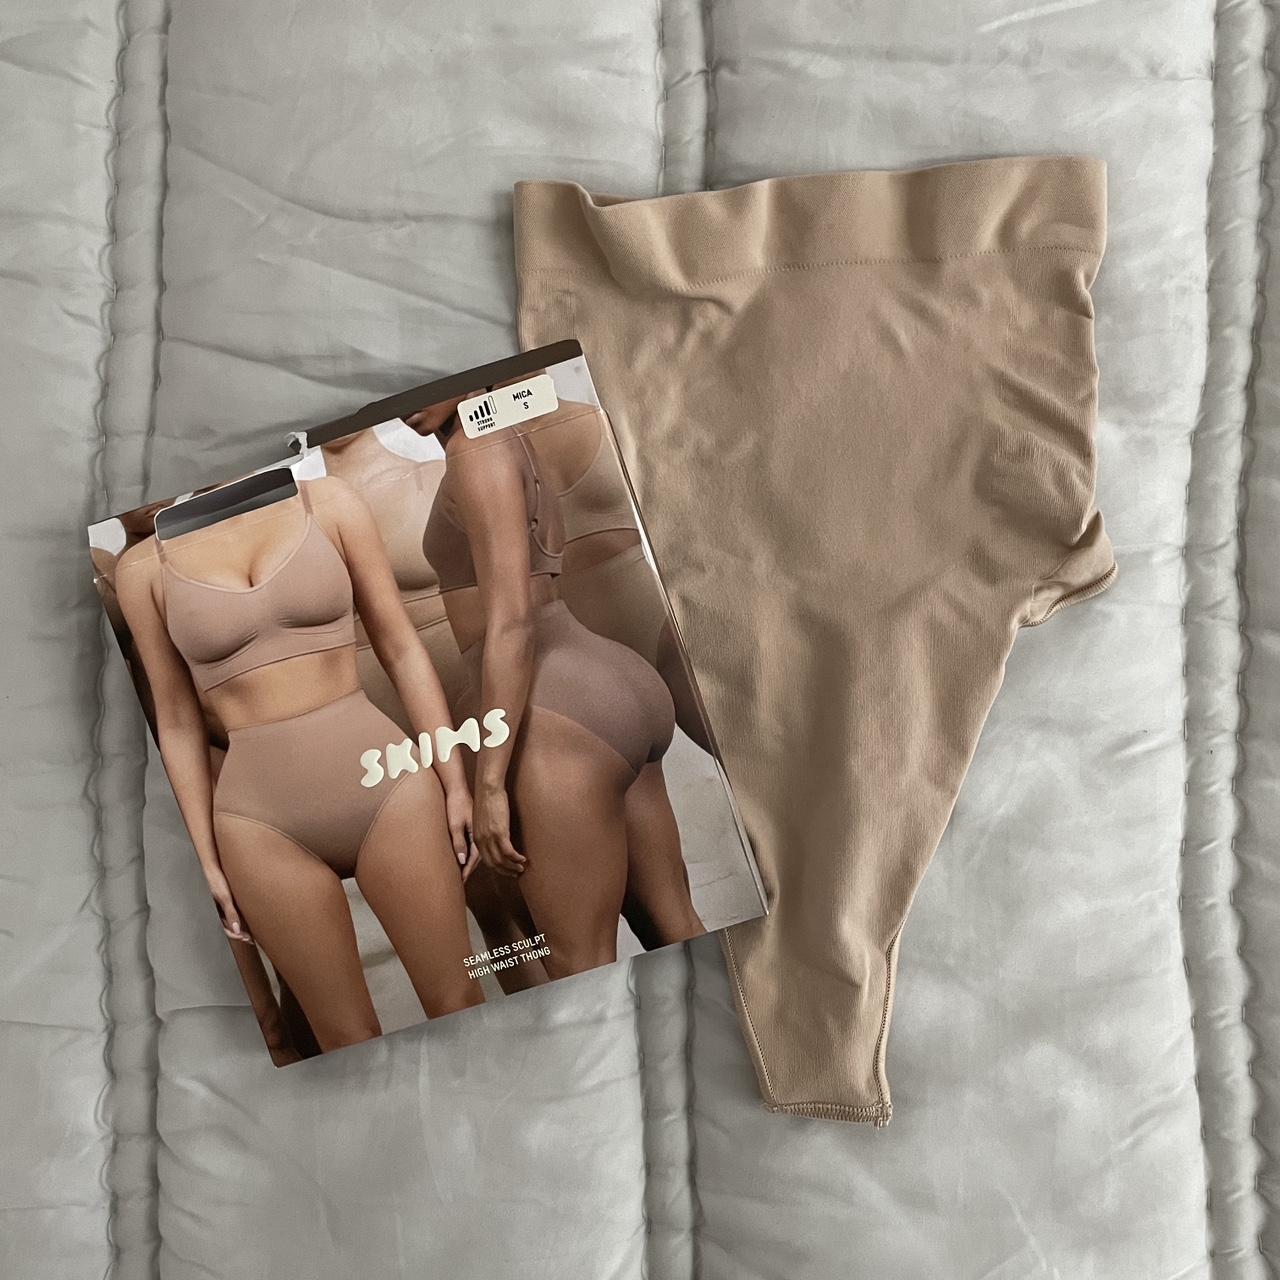 S/M Seamless nude thong shapewear, never worn, - Depop